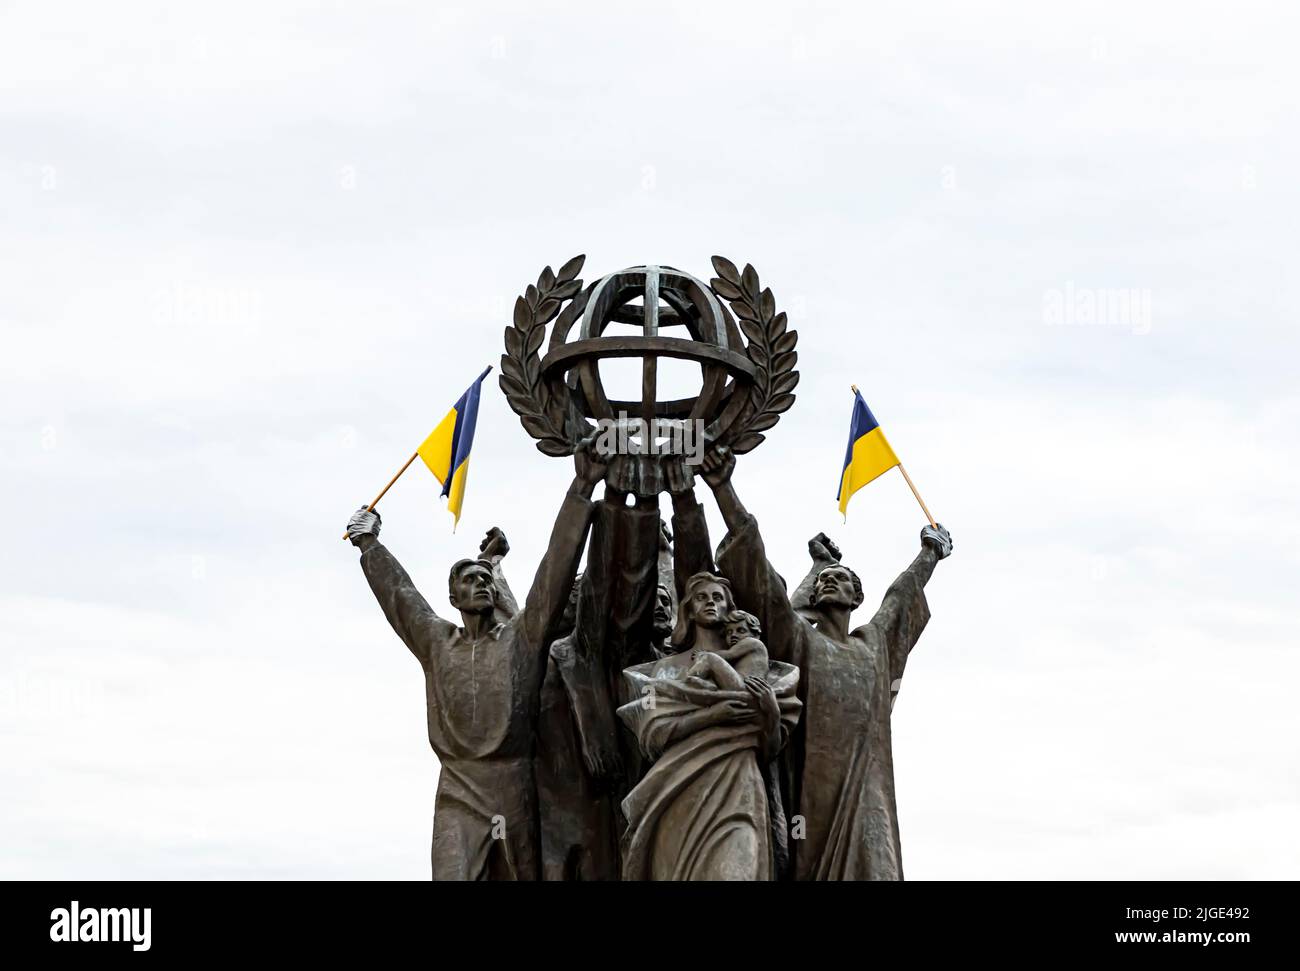 The 'World peace' bronze sculpture in Hakaniemenranta, Helsinki, Finland, with Ukrainian flags duct-taped to it. Stock Photo